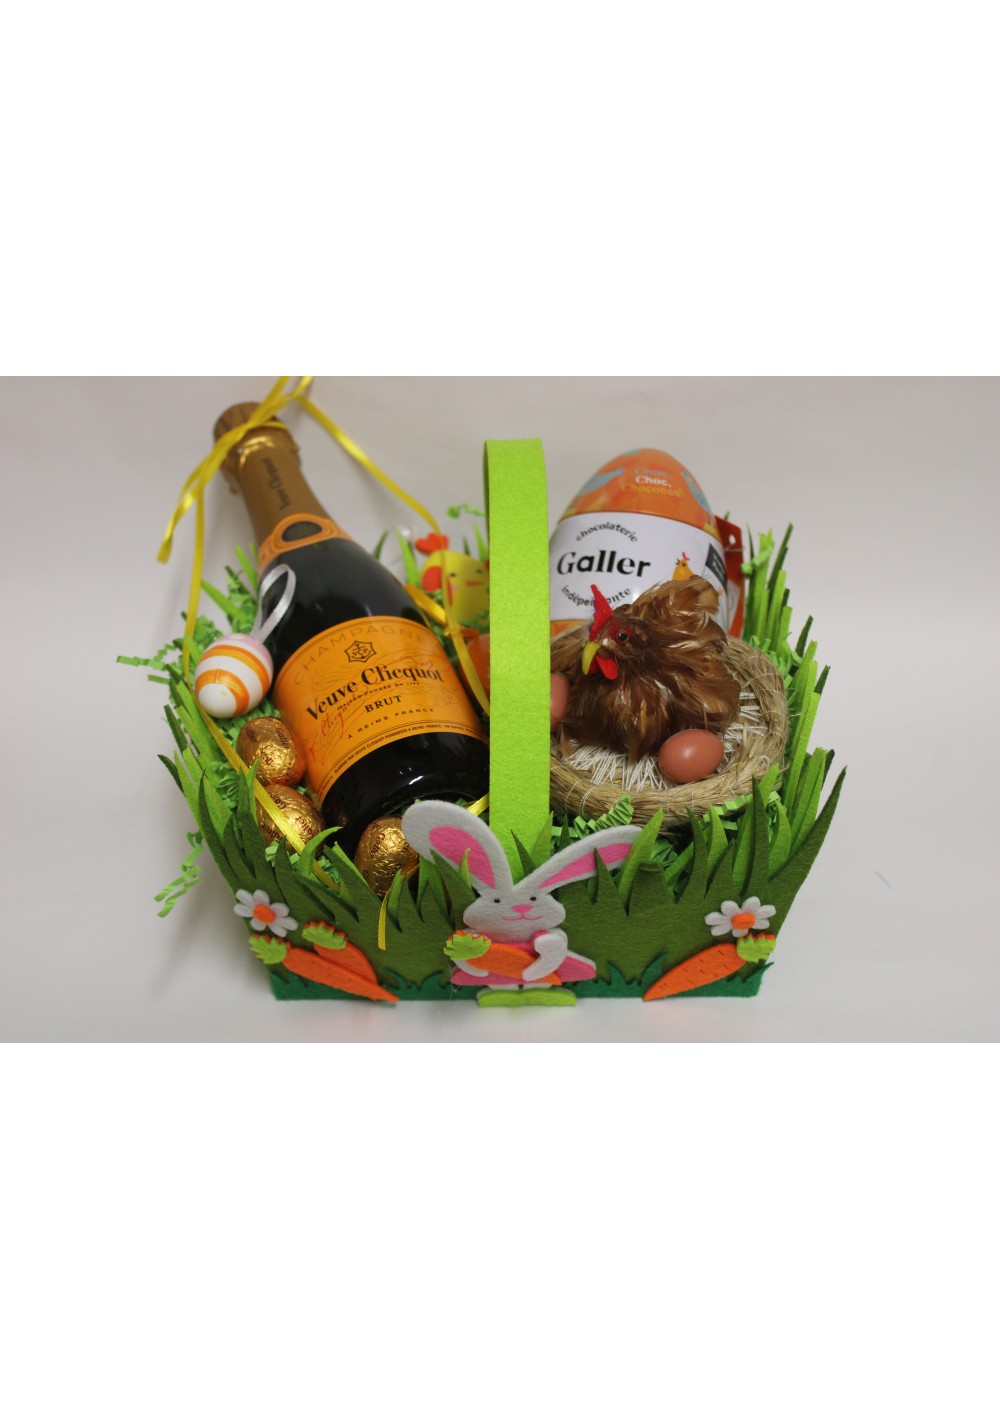 Easter delights in Spring - Gift basket birthday